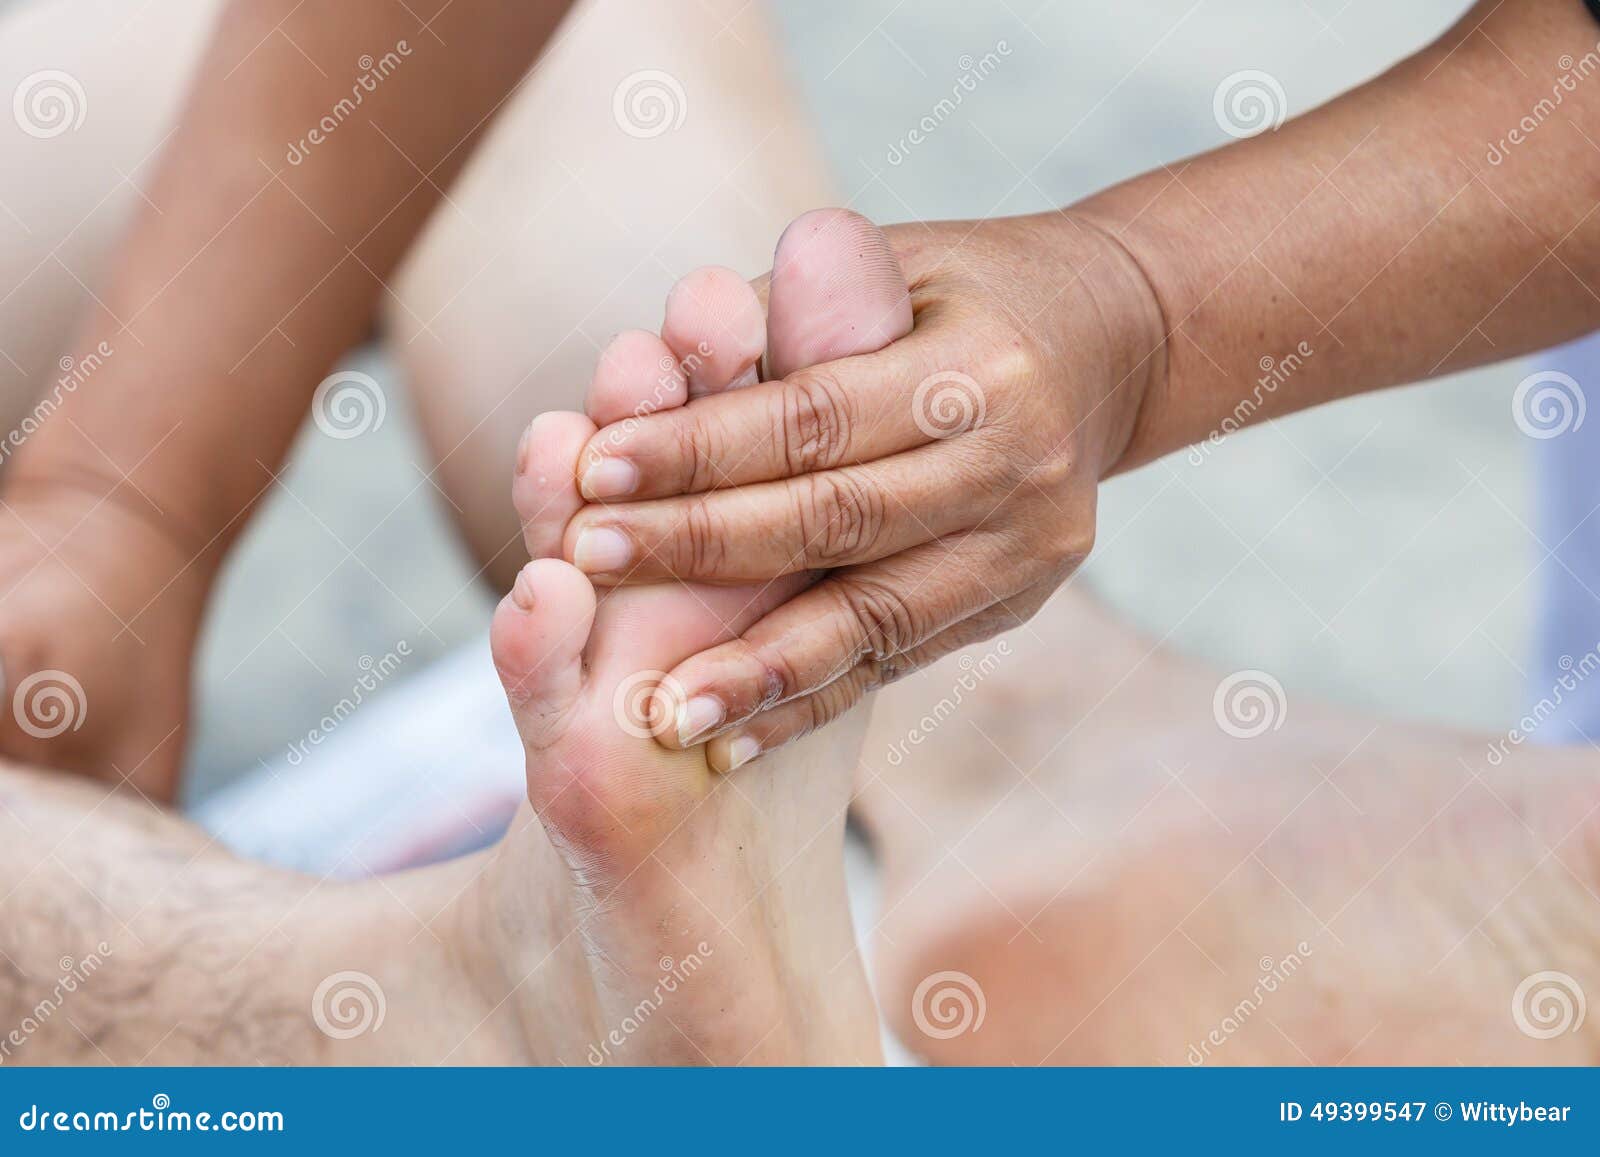 Руки и ноги коликами. Person has foot Cramp photo. Ушиб руки фото девушки.